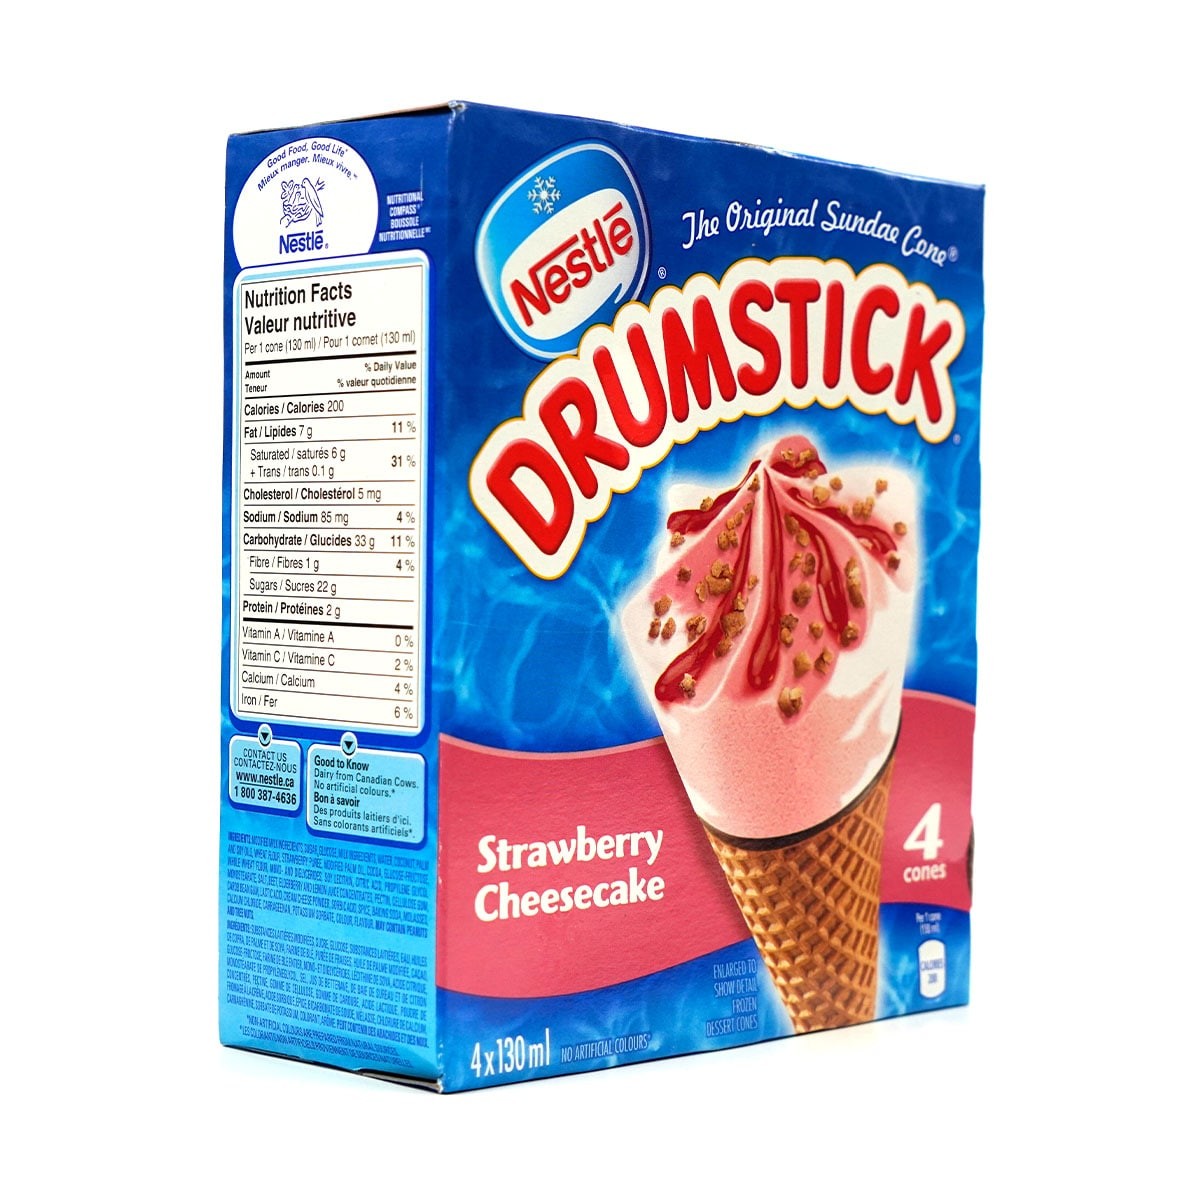 nestle-drumstick-cones-strawberry-cheesecake